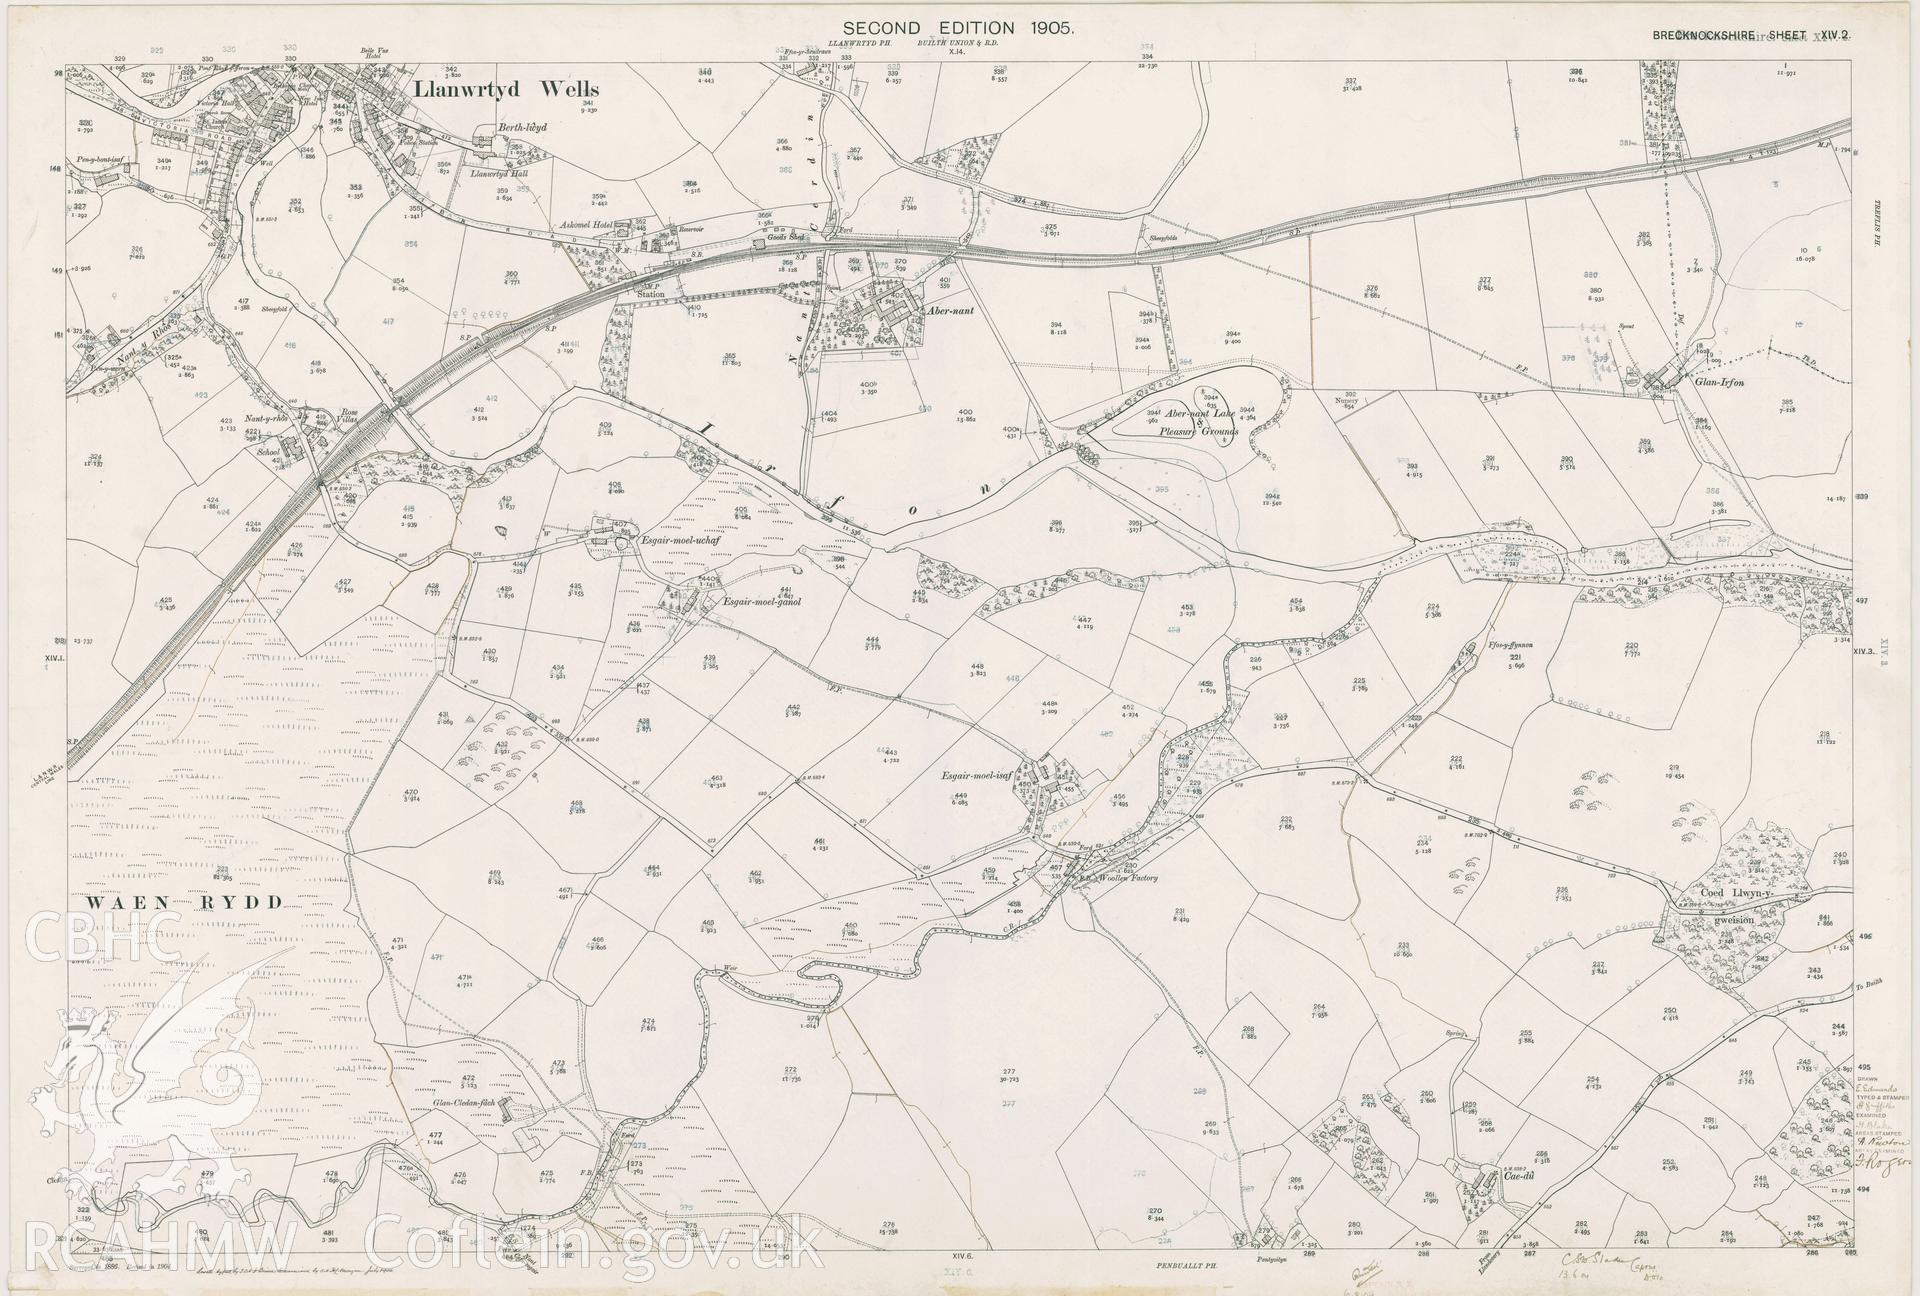 Digitized copy of Ordnance Survey 25 inch coloured map of Llanwrtyd Wells area 1905. Original size.